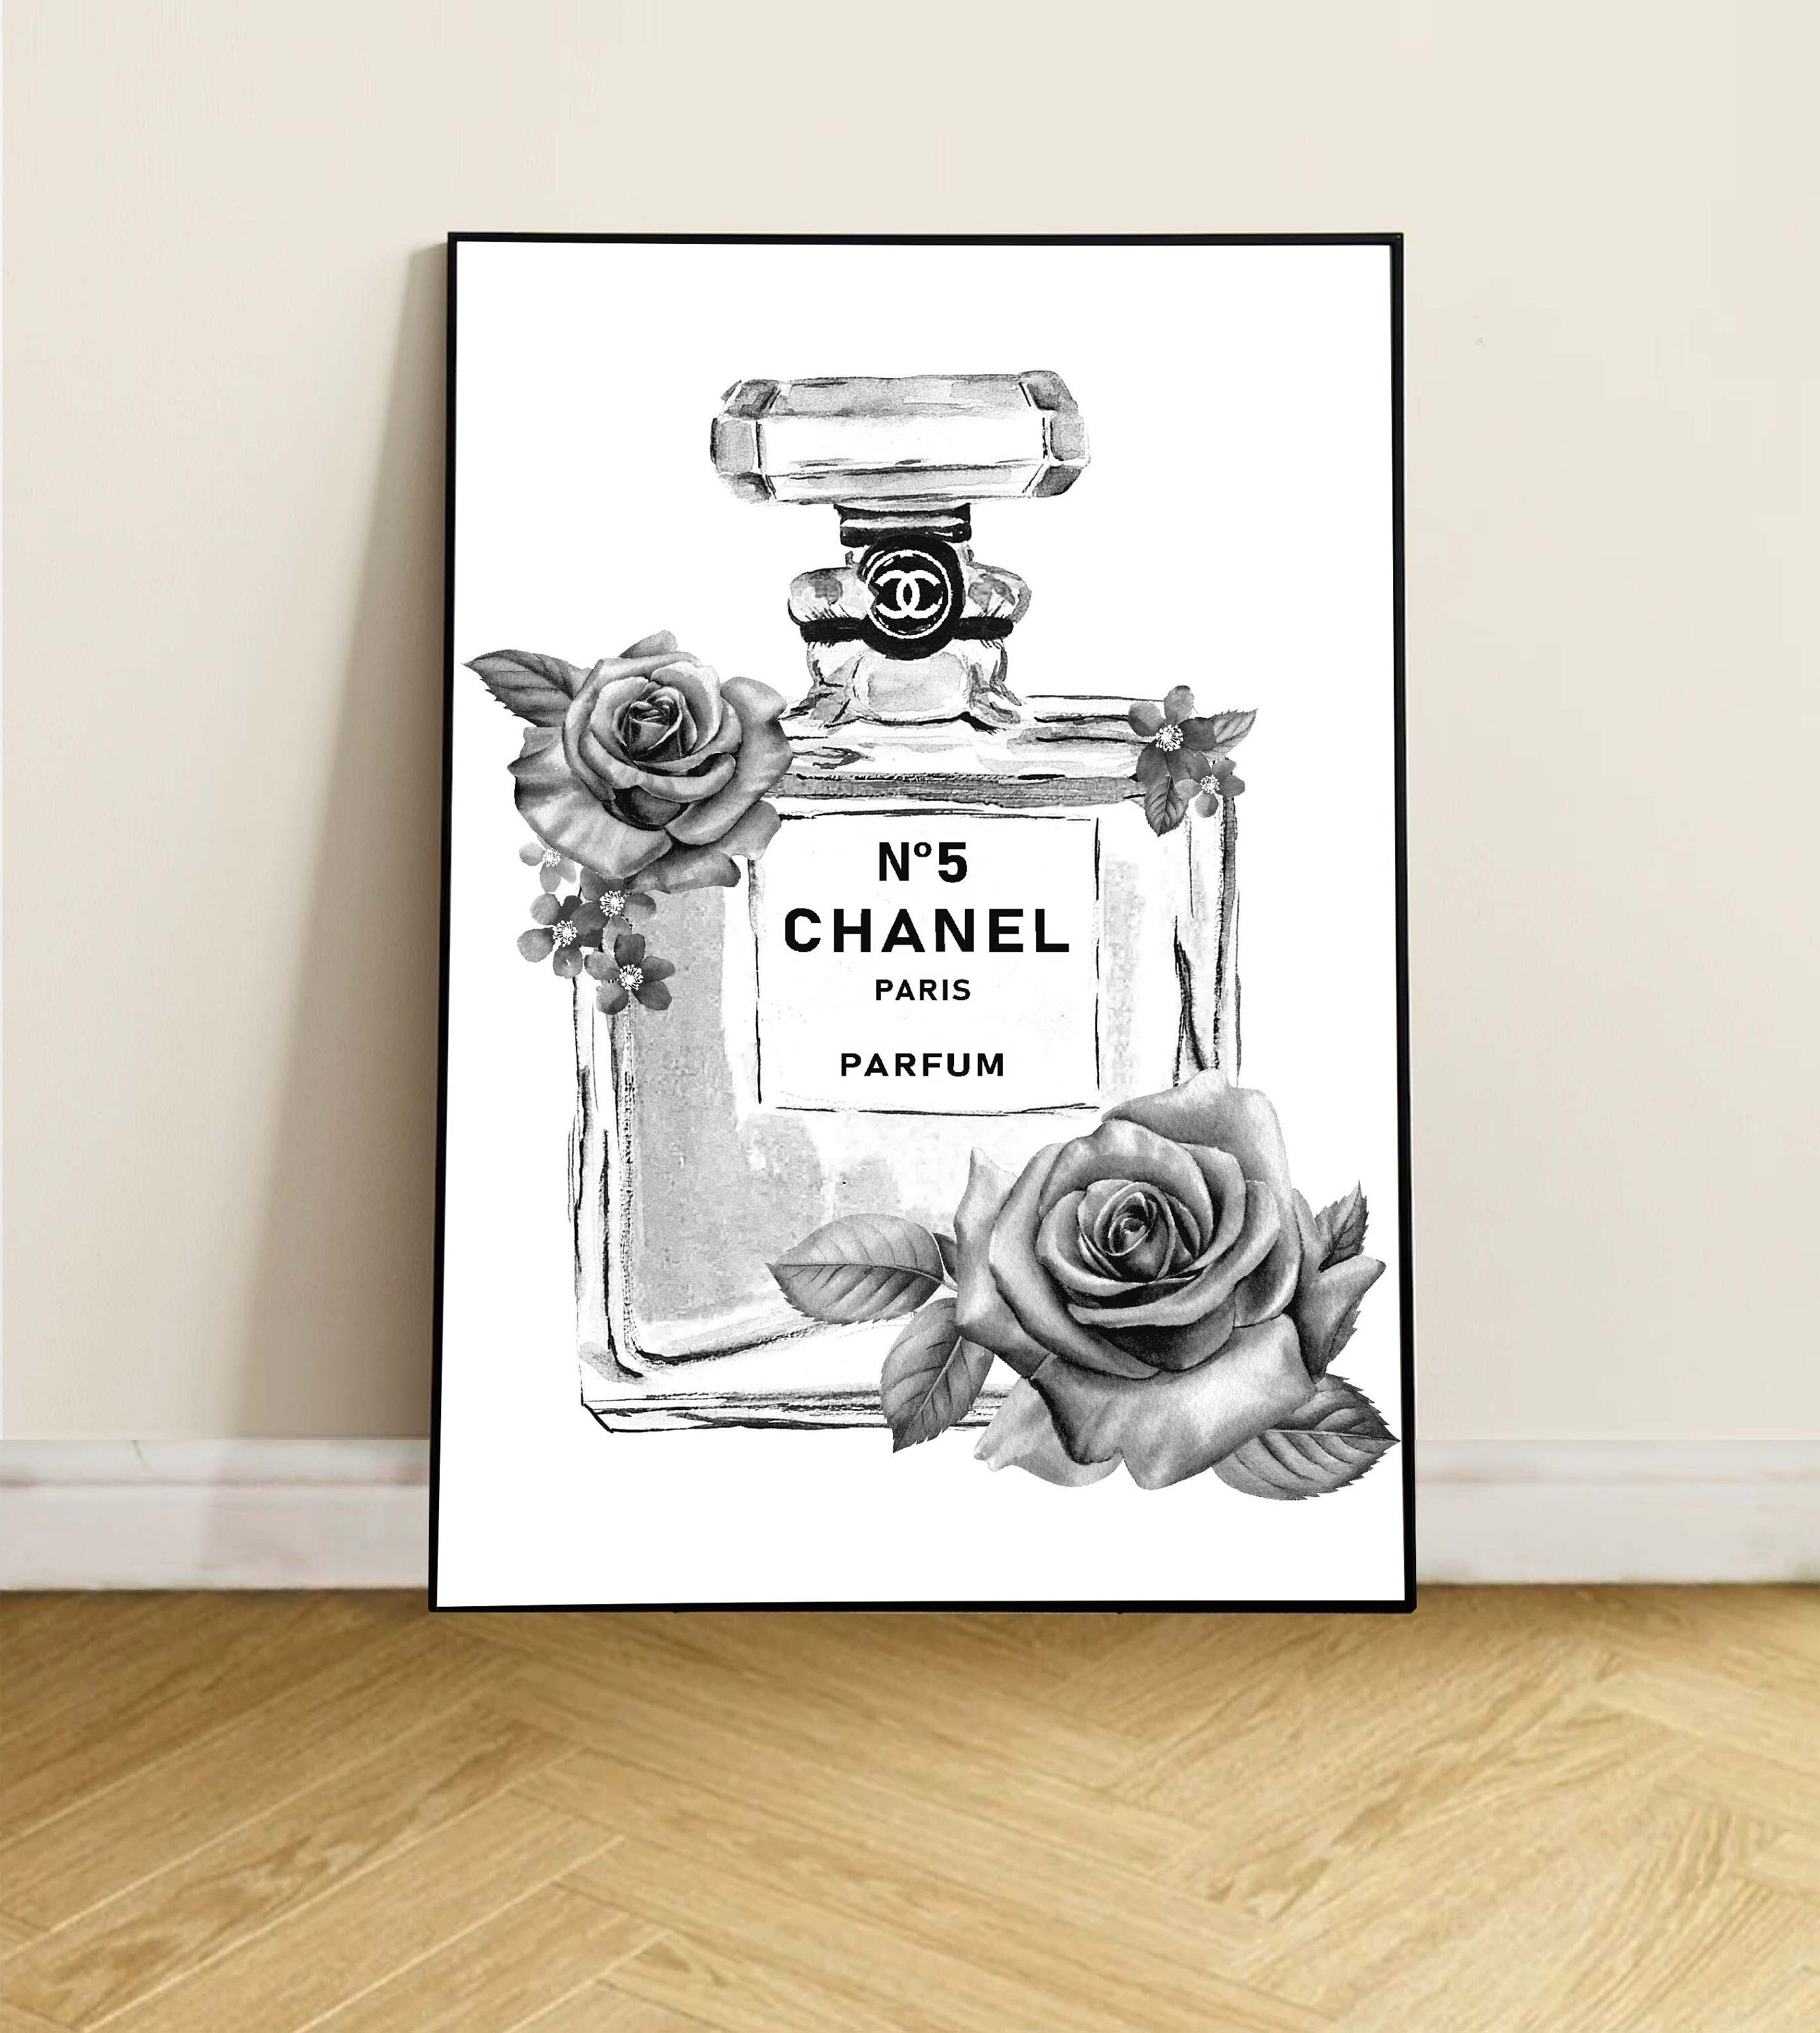 Chanel No 5 Perfume Bottle 